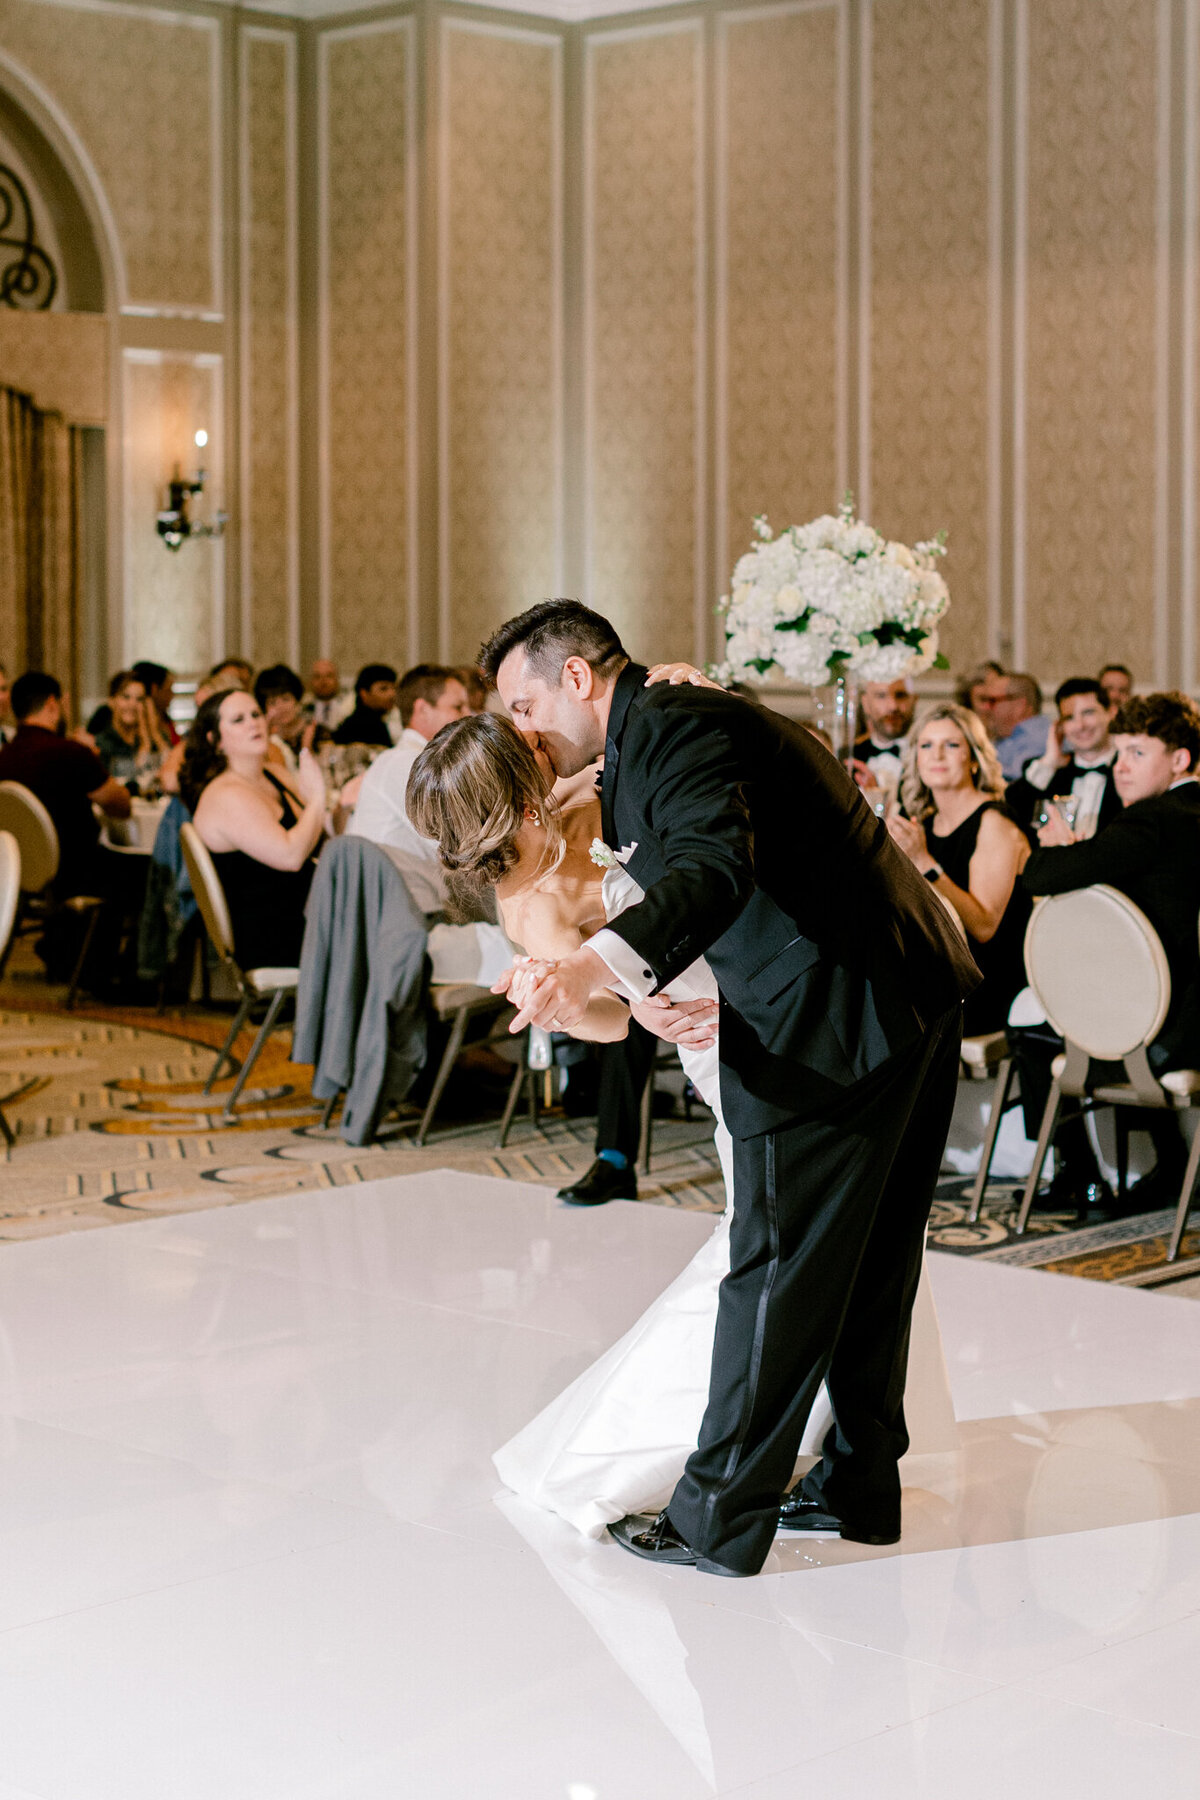 Virginia & Michael's Wedding at the Adolphus Hotel | Dallas Wedding Photographer | Sami Kathryn Photography-199